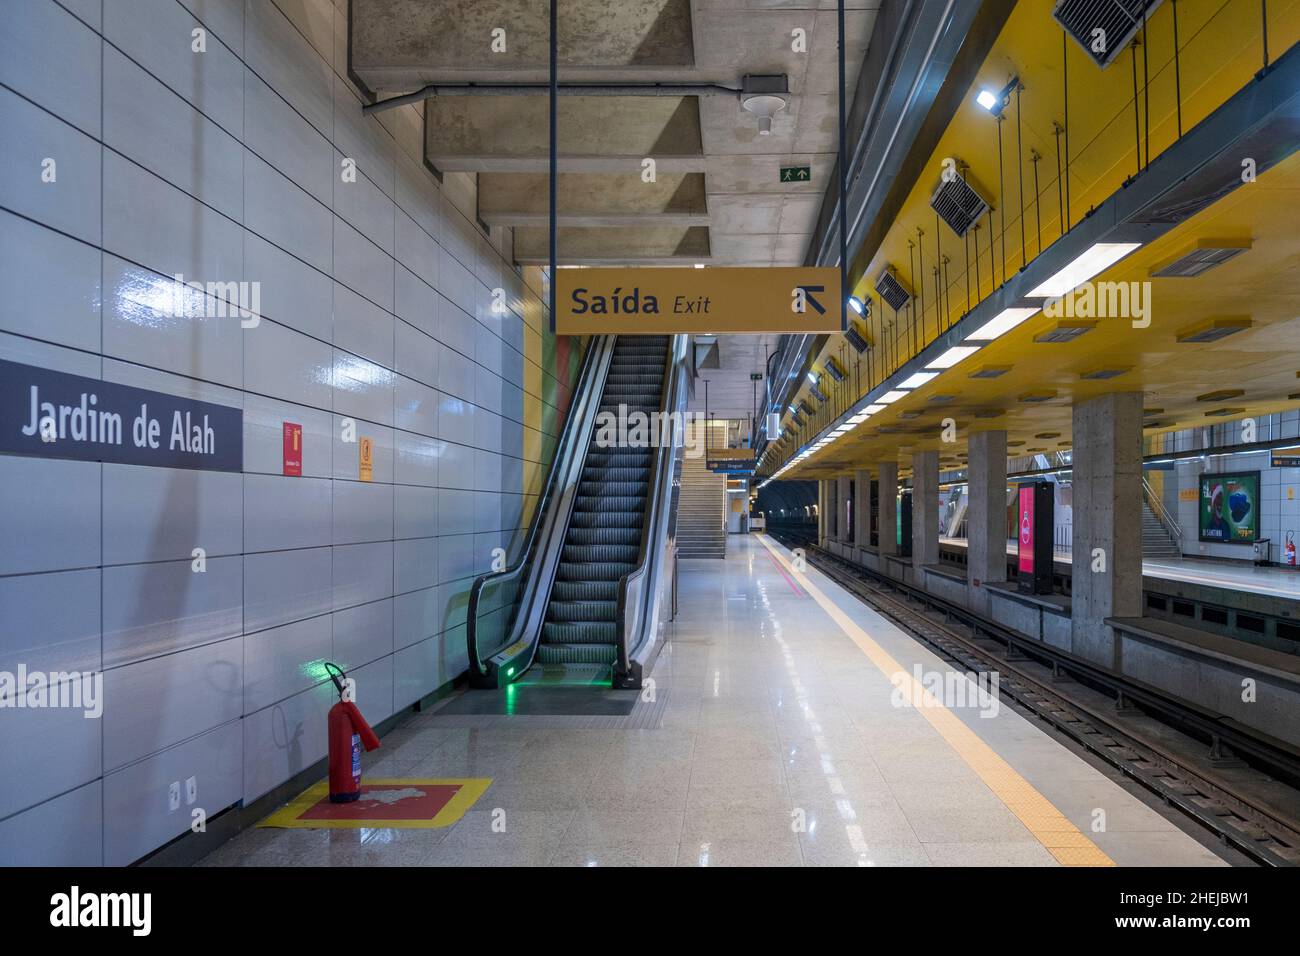 Brazil, Rio de Janeiro, Leblon, Jardim de Alah metro station. Station platform on Linha 4 (line 4) of the subway network Stock Photo